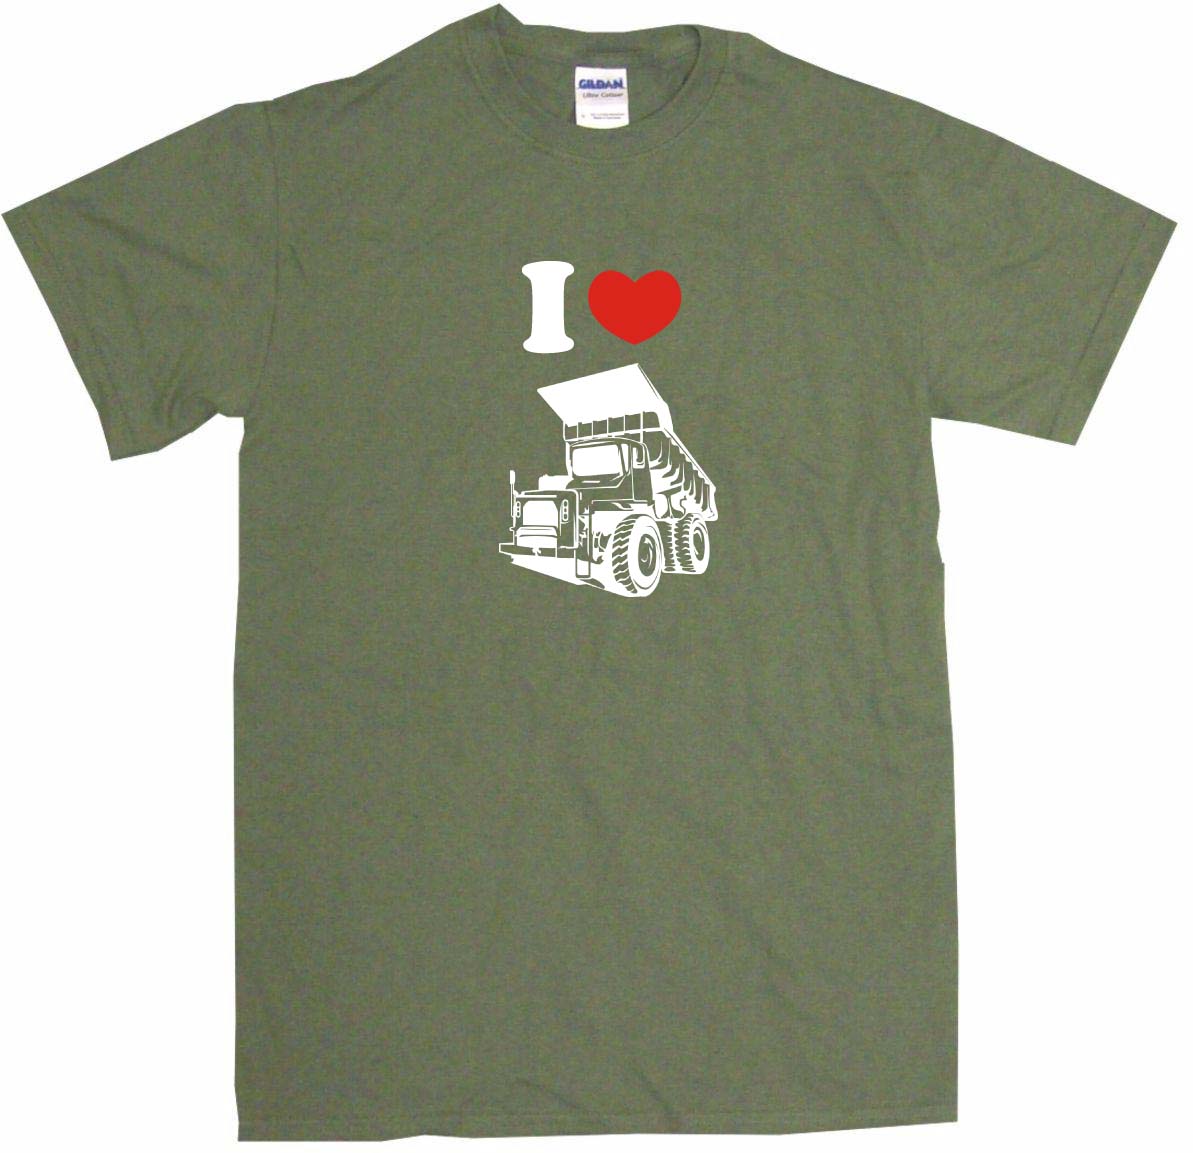 i-heart-love-dump-truck-logo-mens-tee-shirt-pick-size-color-small-6xl